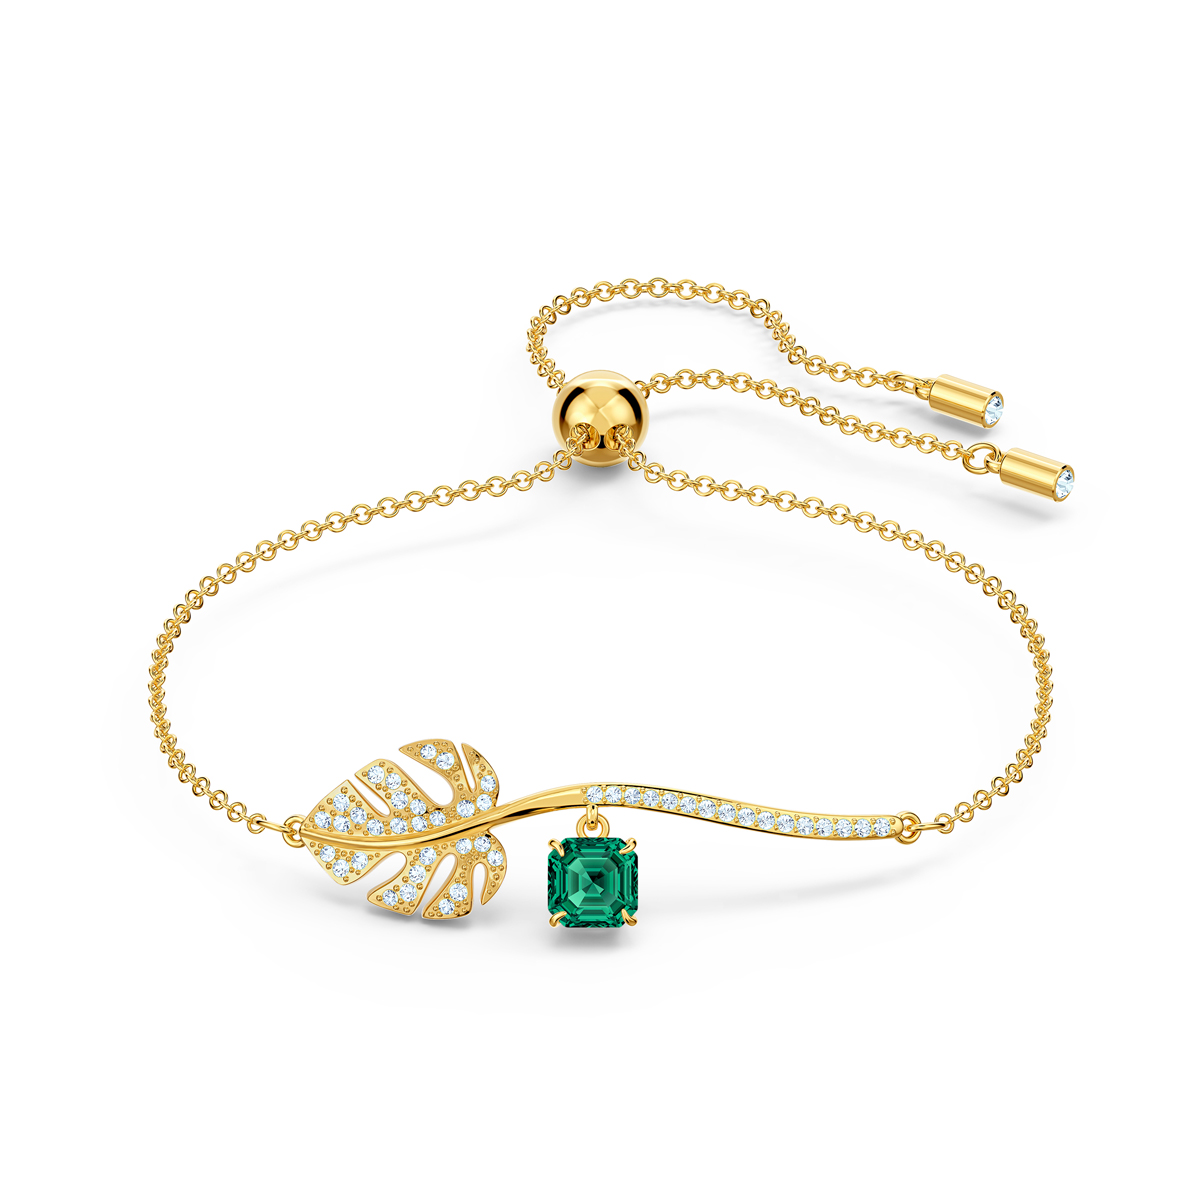 Swarovski Emerald Crystal and Gold Tropical Bracelet